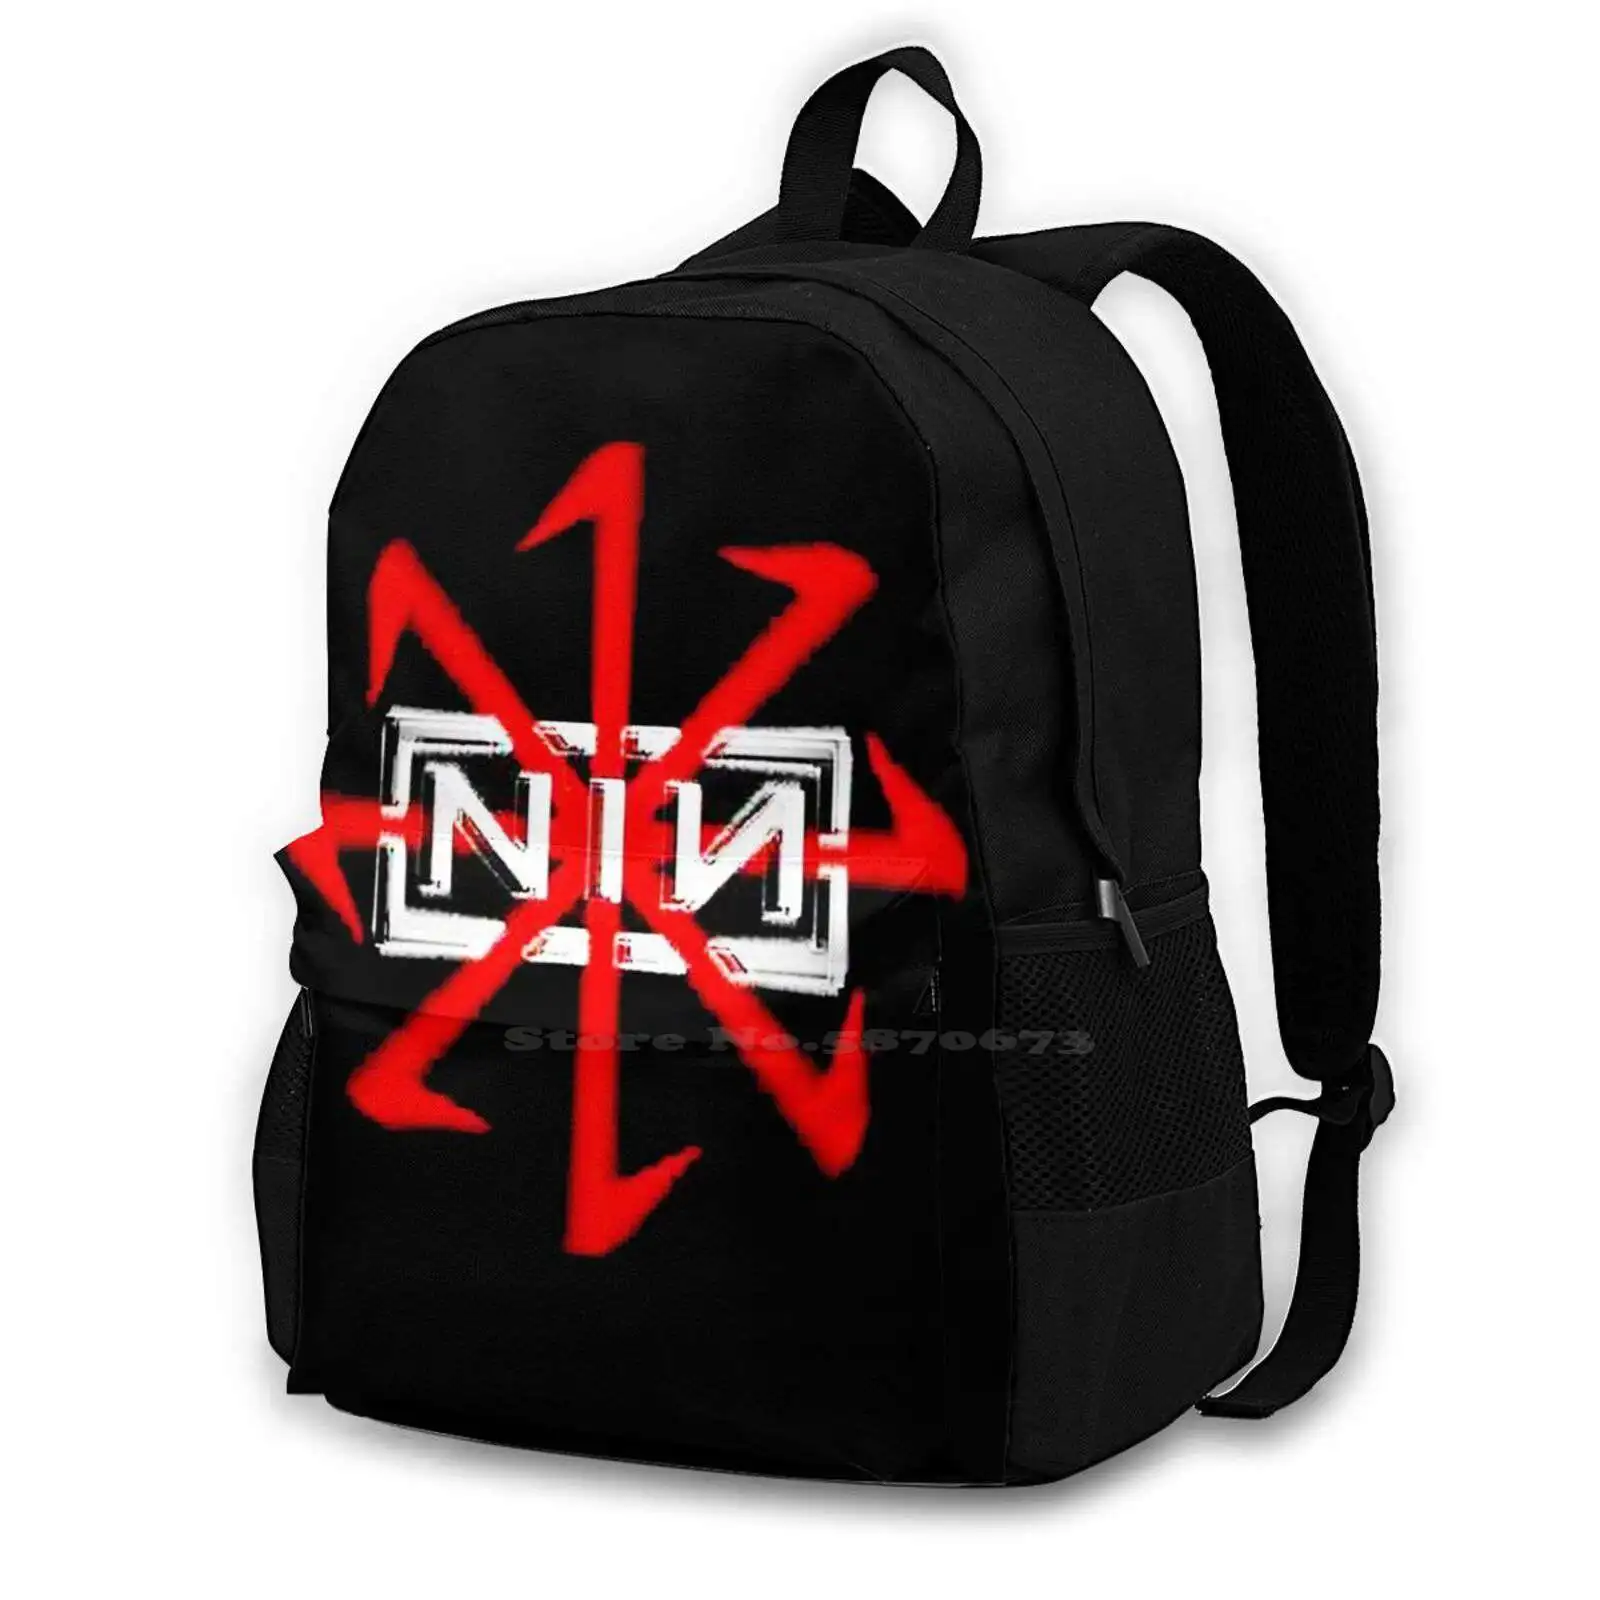 

Red Epic Nin Fashion Travel Laptop School Backpack Bag Nin Band Familliar Logos In Aira Music Tour Feat Nin Band